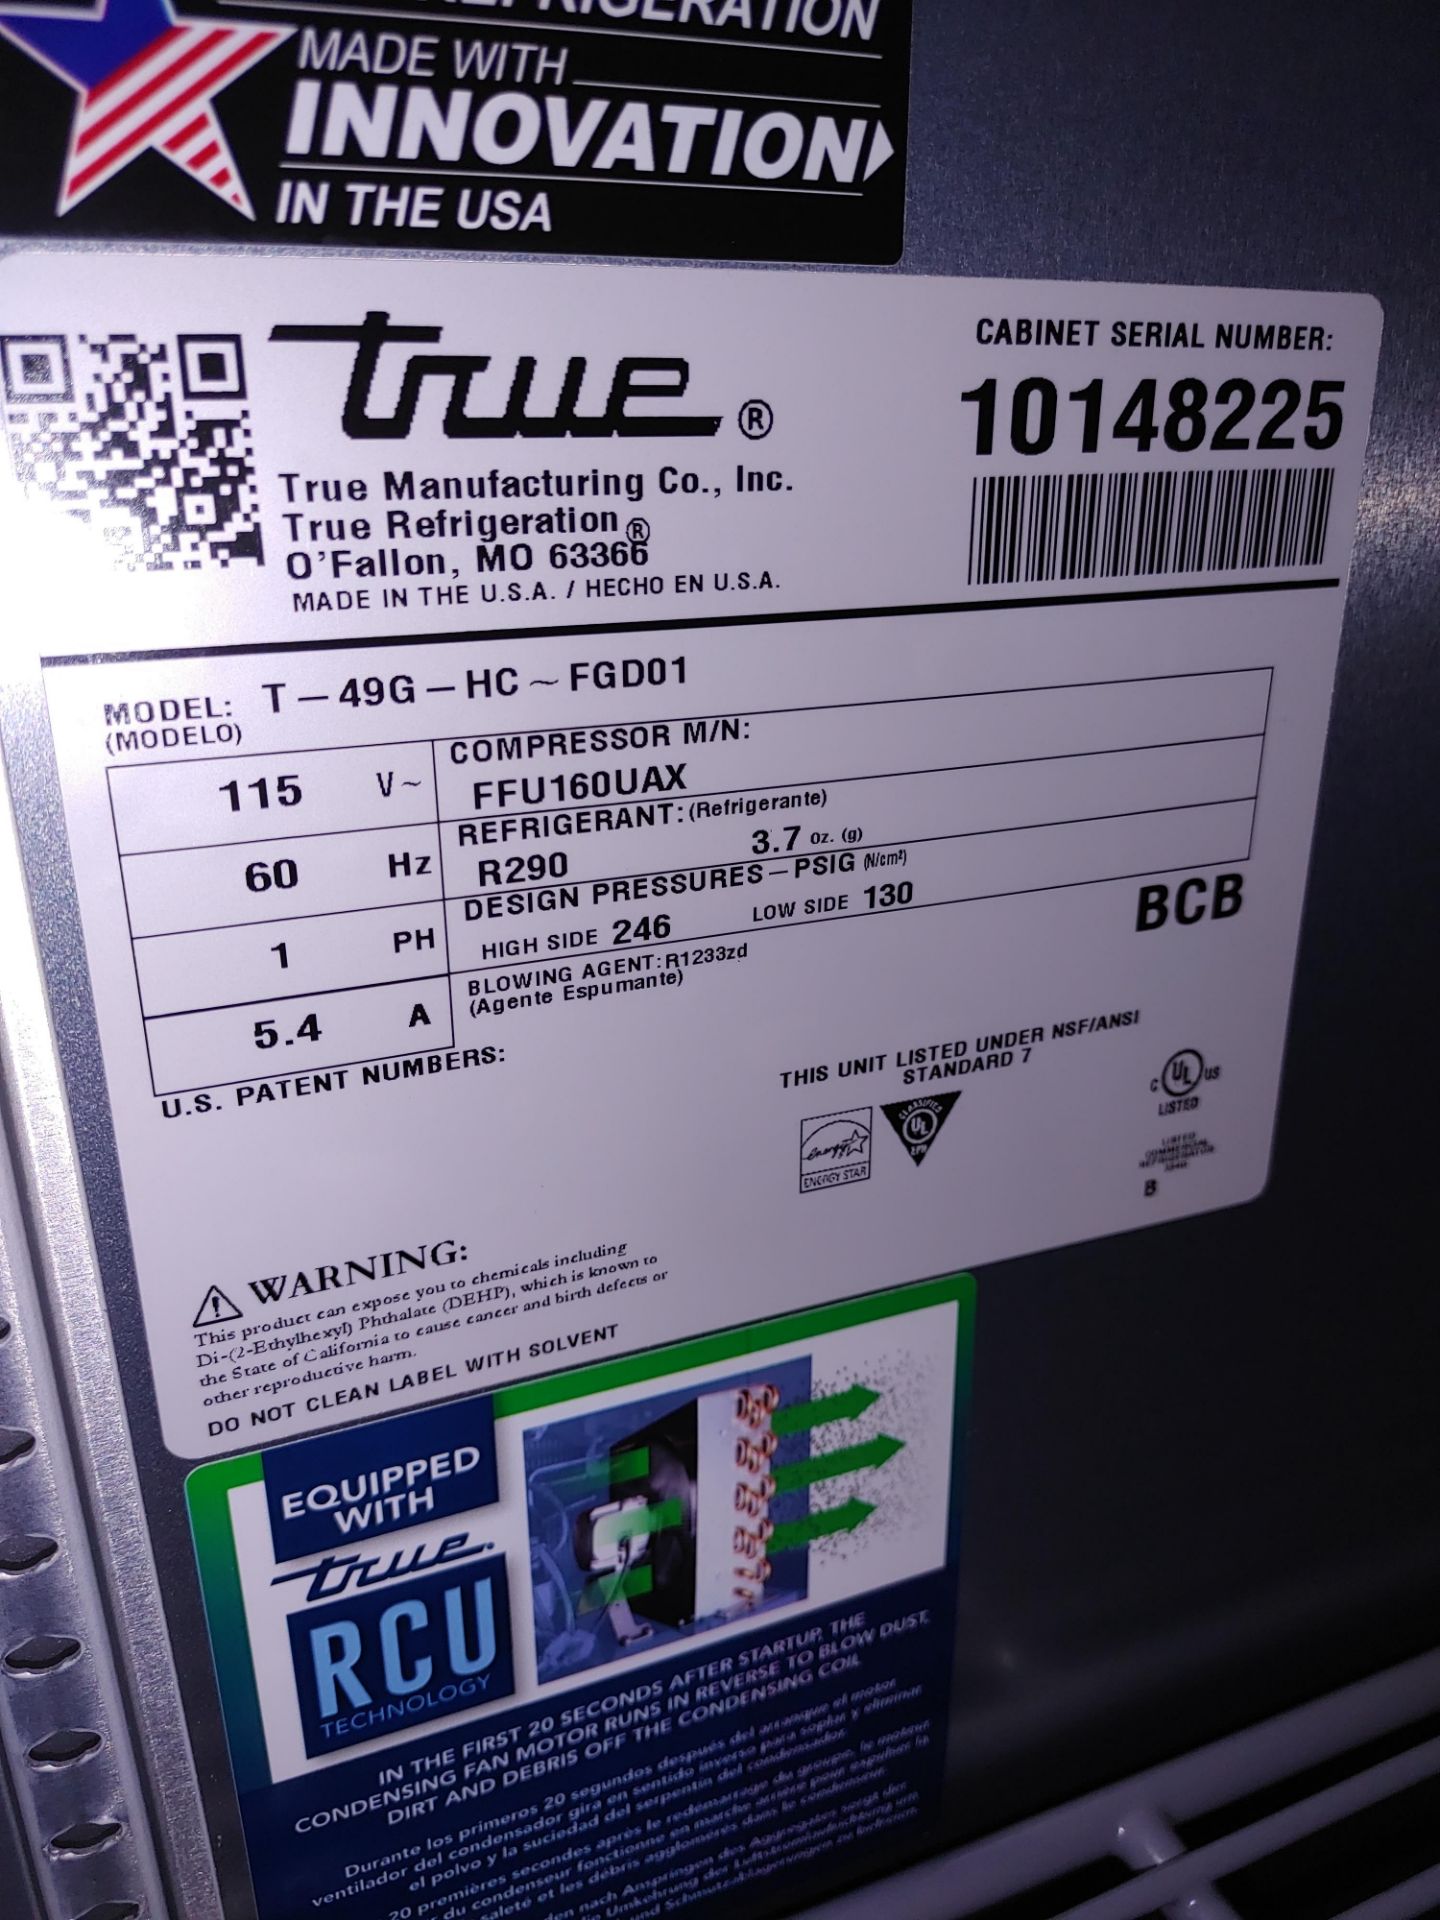 True "T-49G-HC-FGD01" 2 Door Glass Front Refrigerator S/N 10148225 - Image 2 of 2